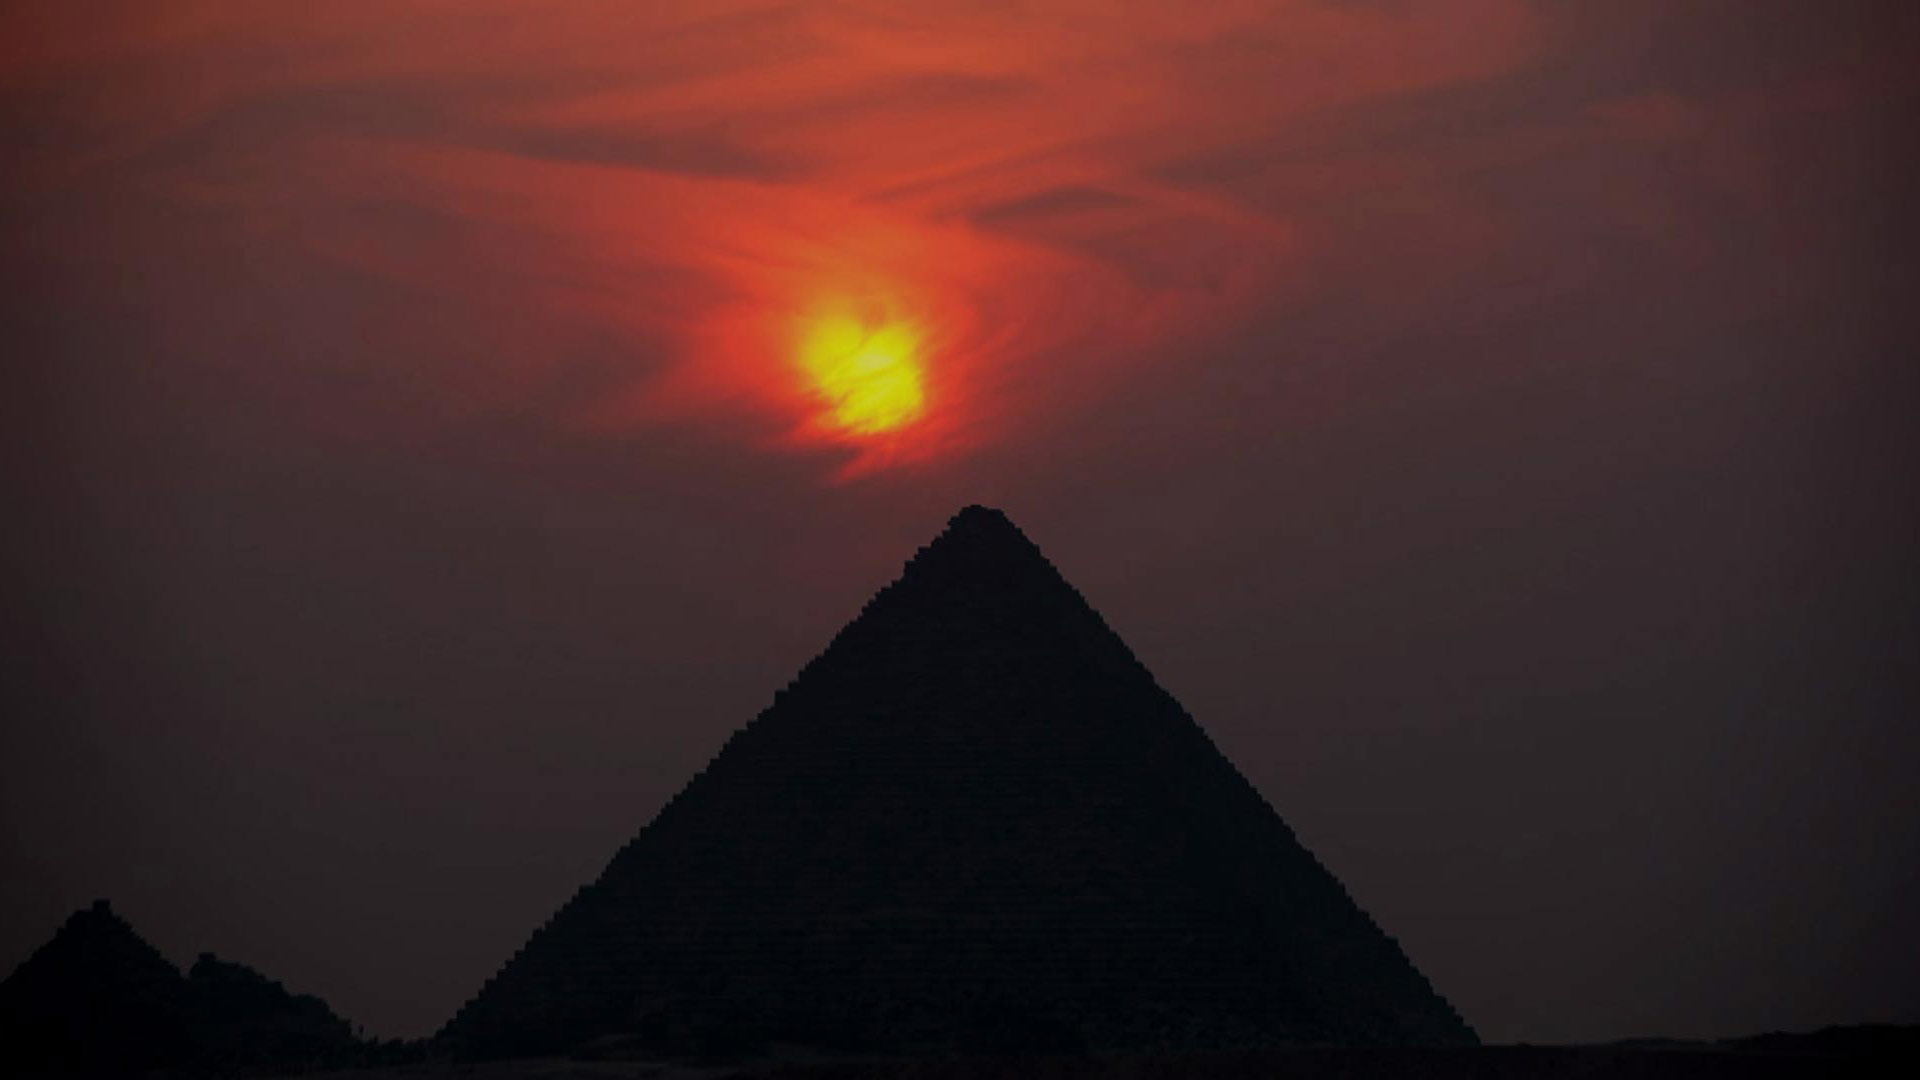 NOVA: Decoding the Great Pyramid
